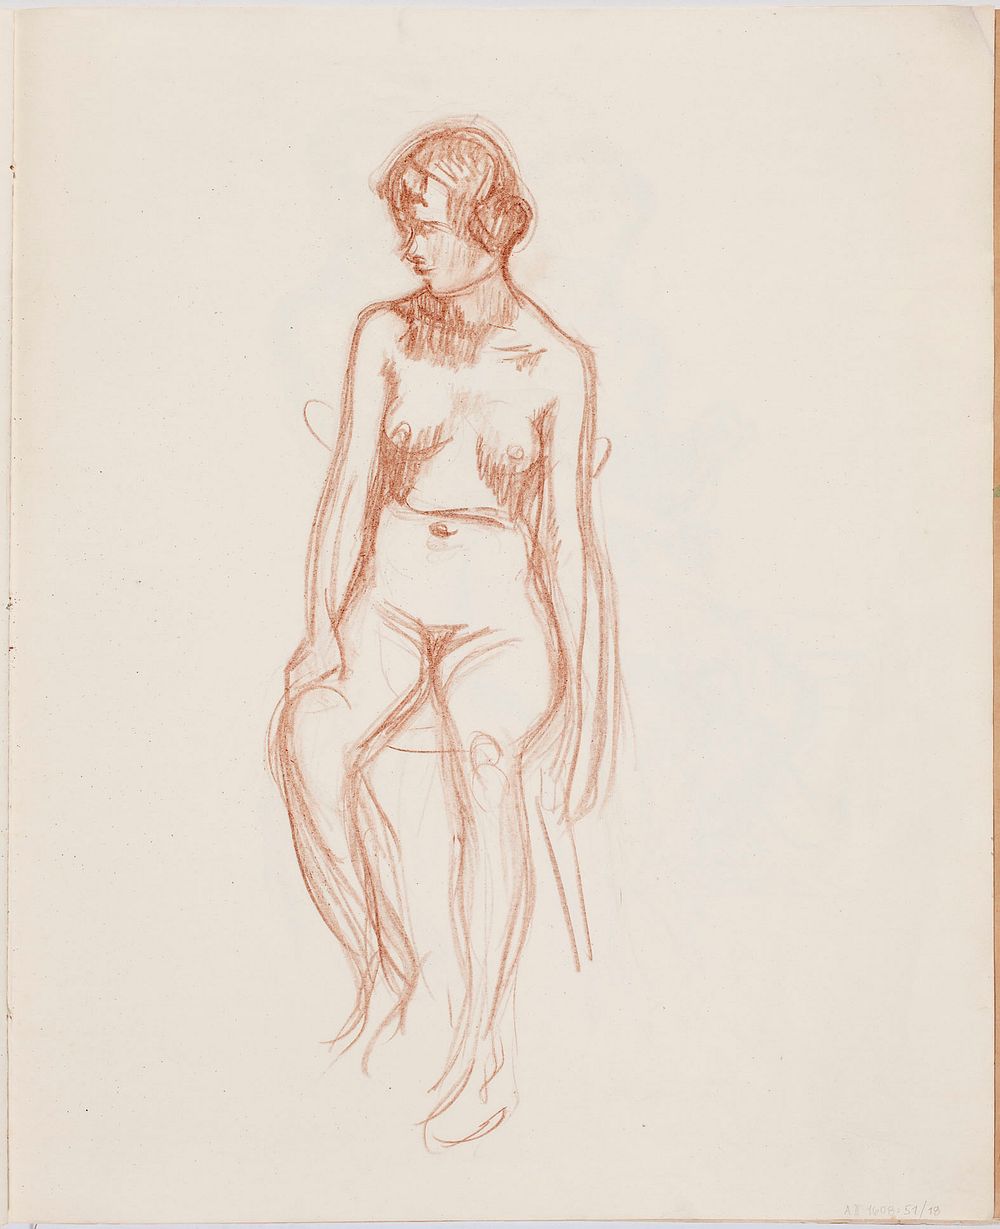 Istuva alaston nainen, luonnos, 1912 - 1913part of a sketchbook by Magnus Enckell